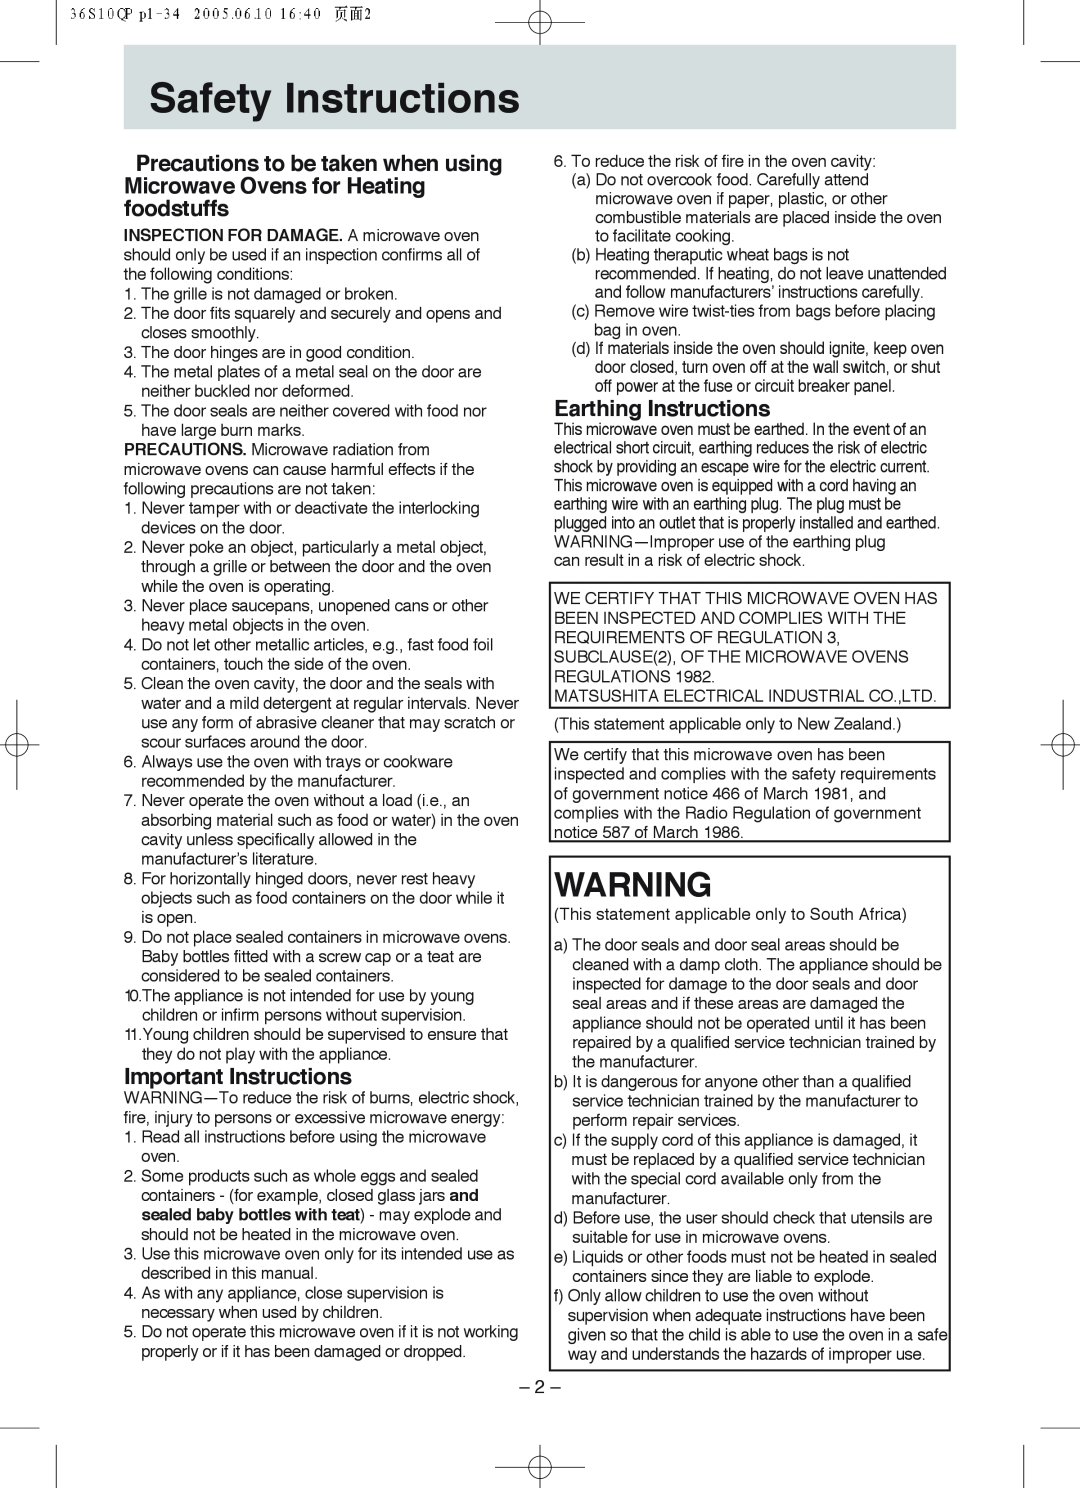 Panasonic NN-S215, NN-S235 manual Safety Instructions, Important Instructions, Earthing Instructions 